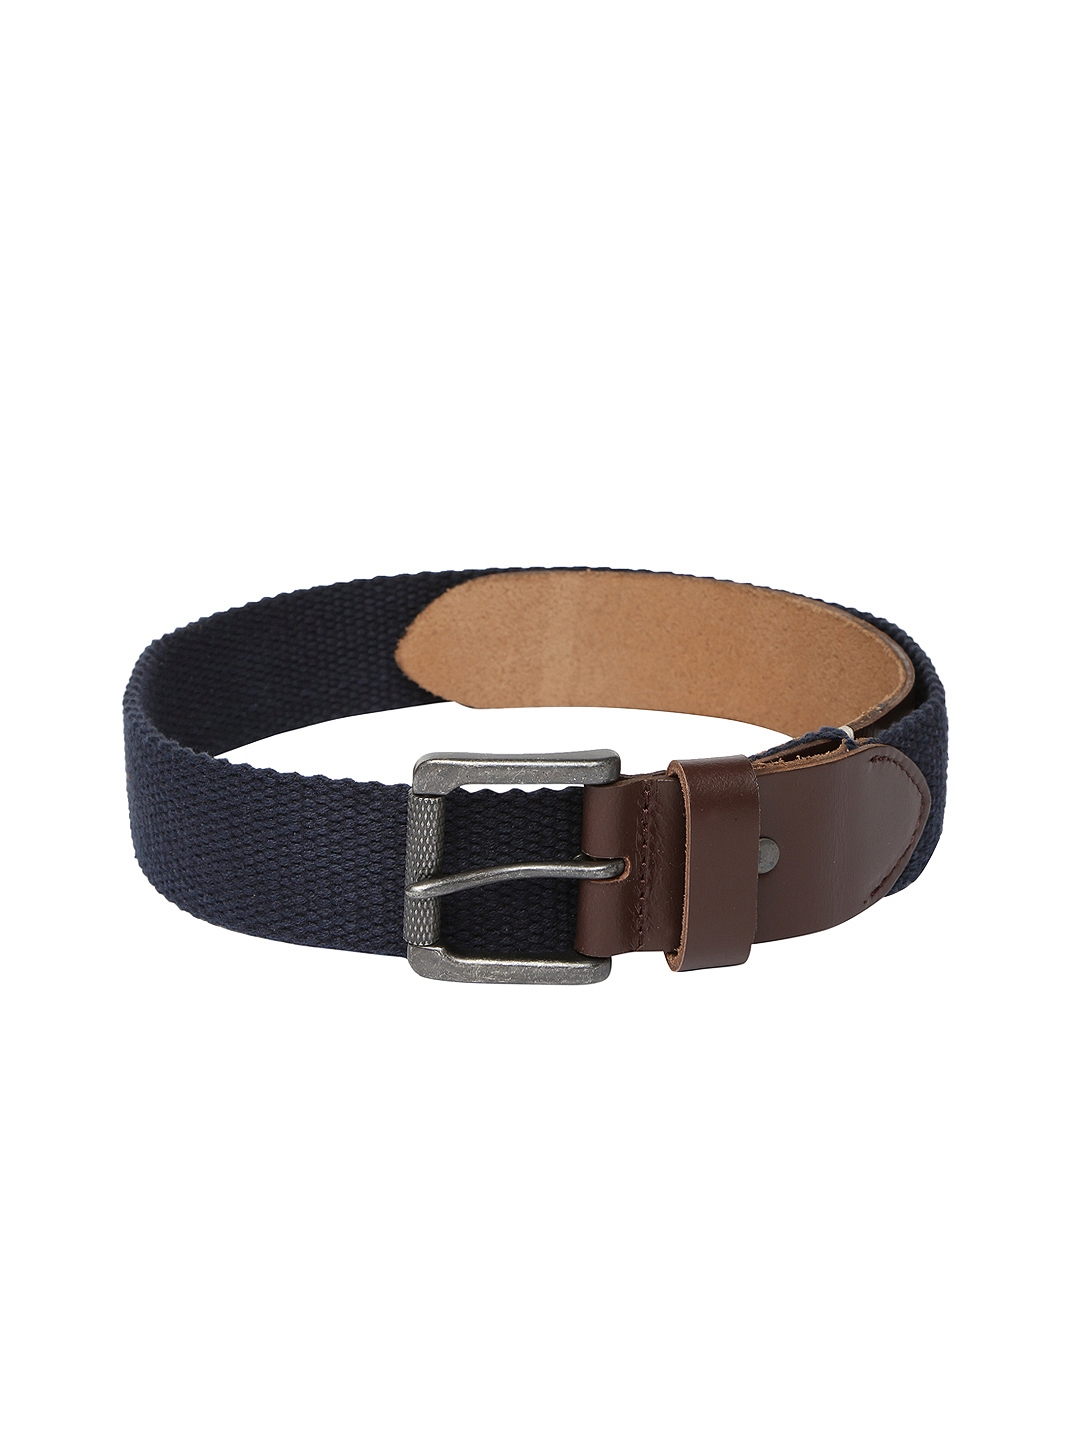 Buy Levis Men Navy Canvas & Leather Belt - Belts for Men 406825 | Myntra